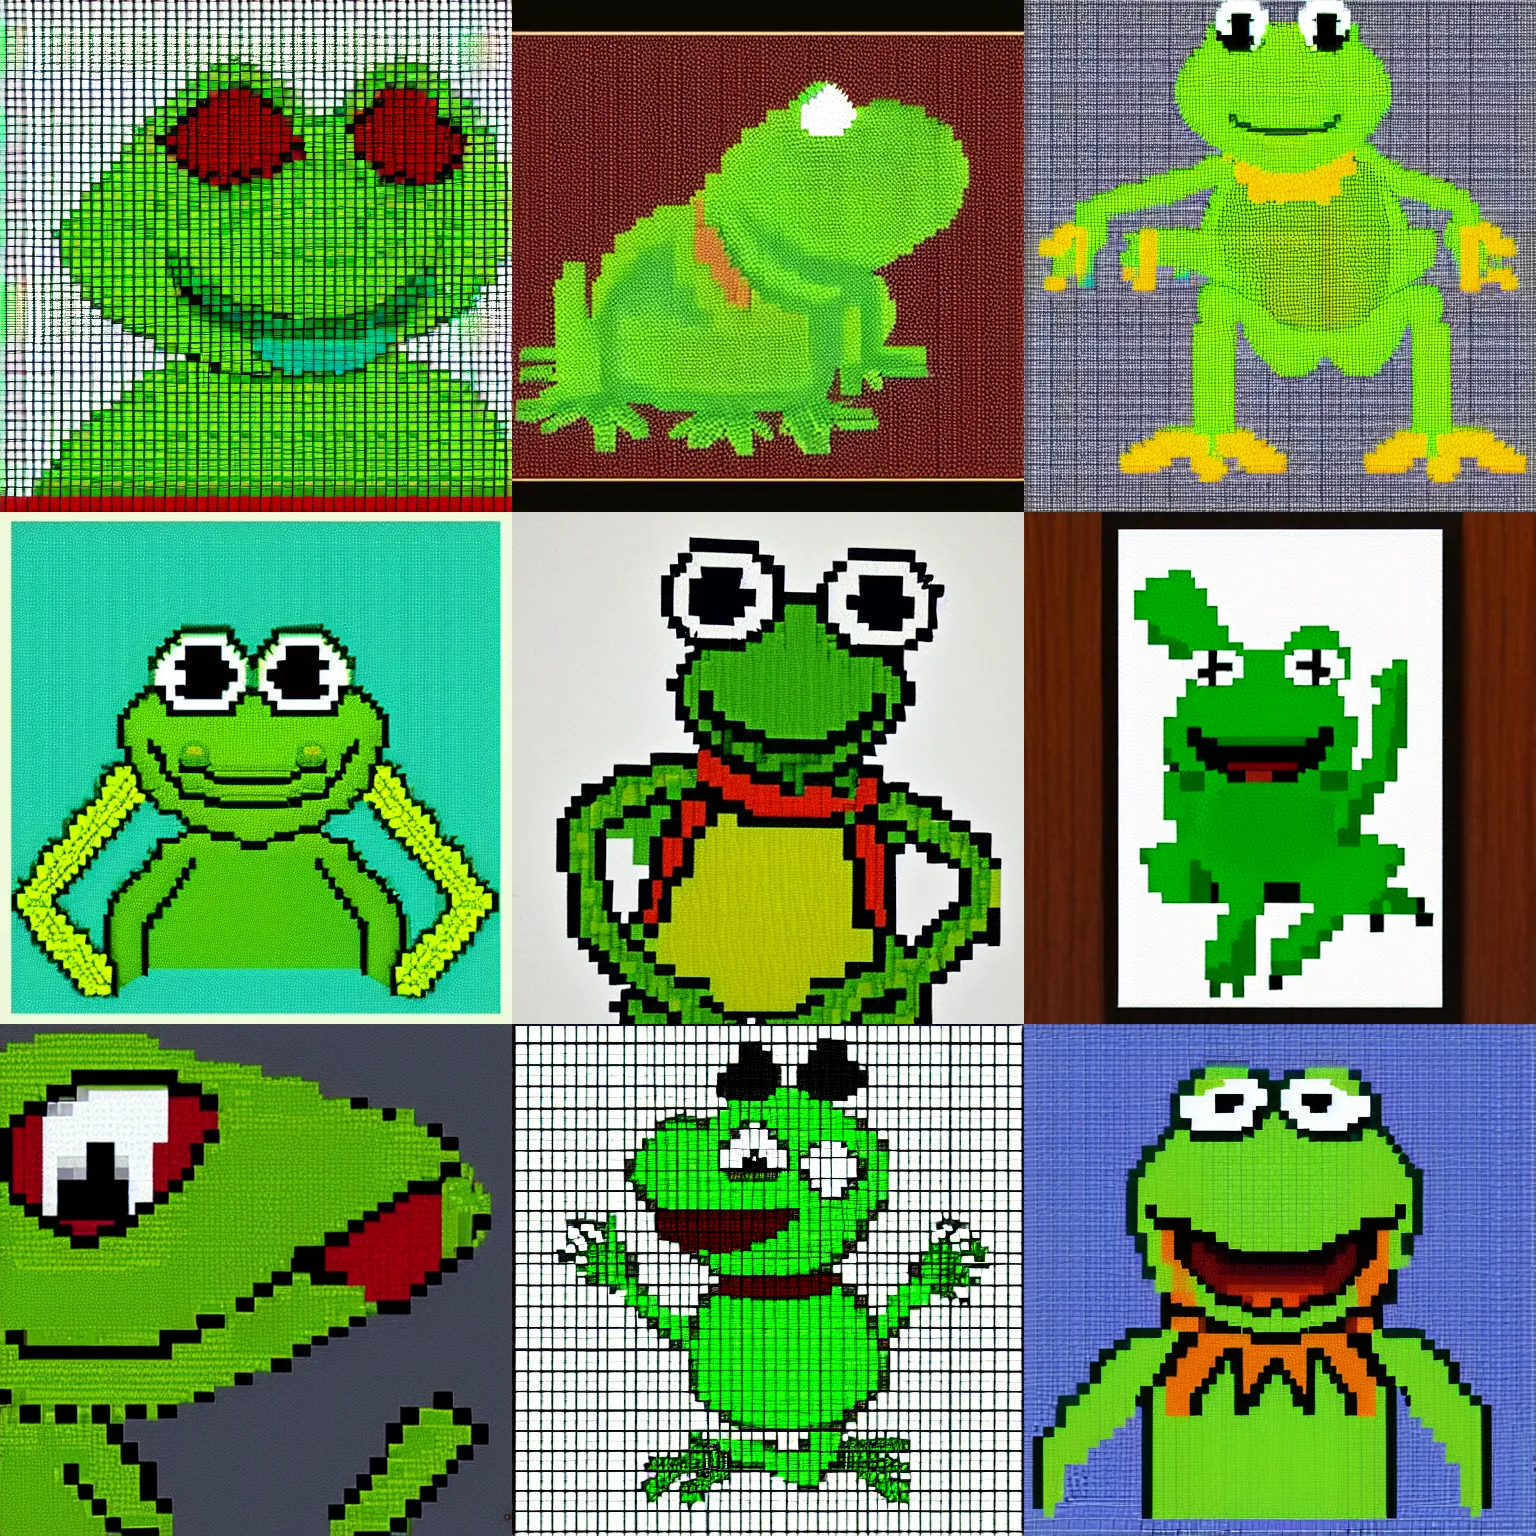 Prompt: detailed pixel art of Kermit the Frog